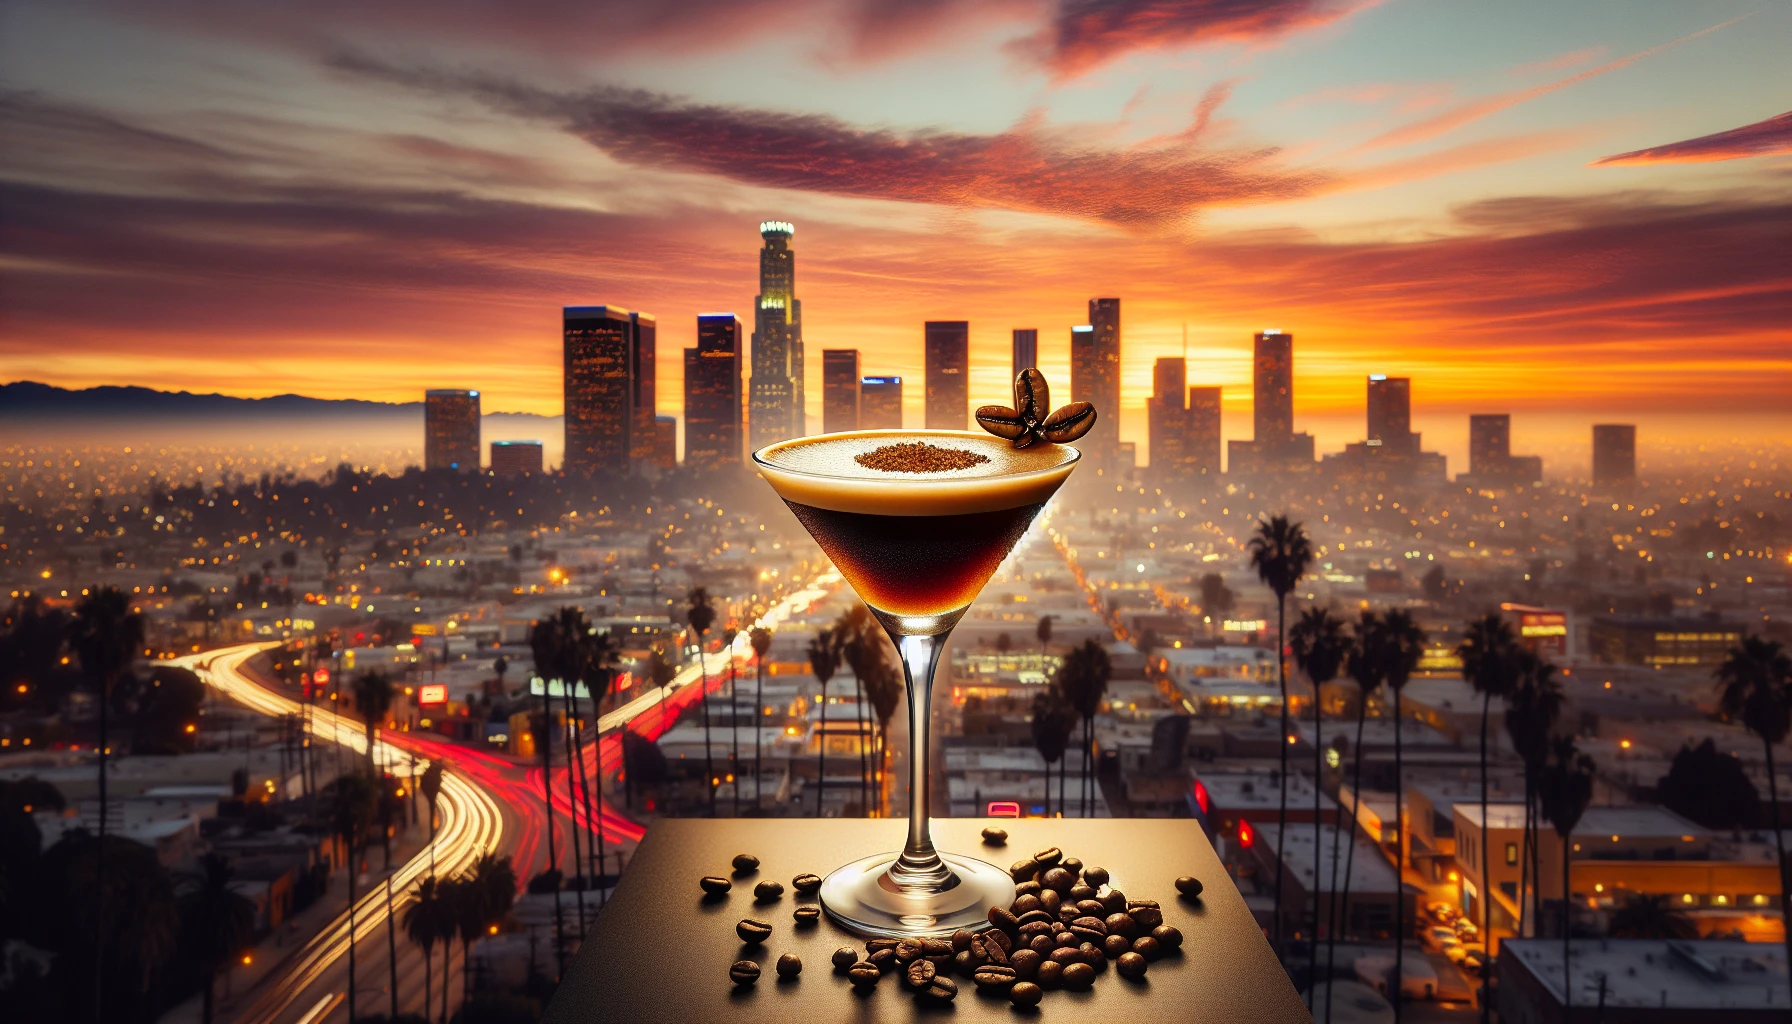 The best espresso martini recipe in Los Angeles, simply magical!